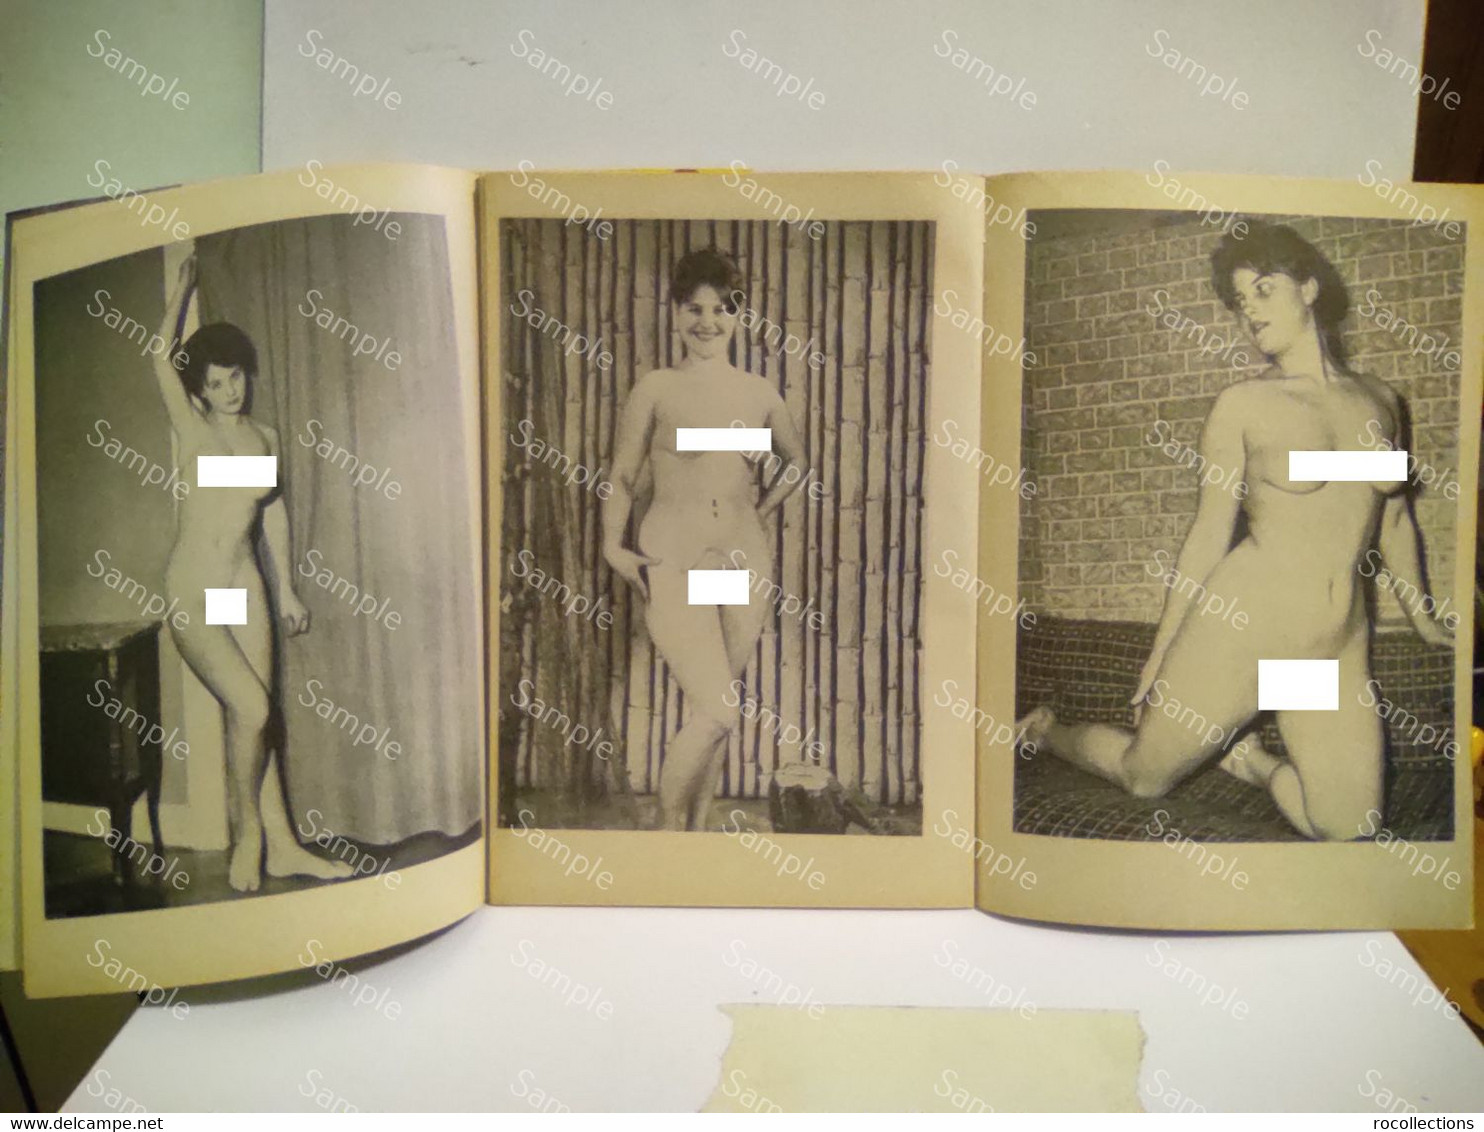 3x Magazine PARIS - HOLLYWOOD 1962 Nude Sexy Erotic Girls Magazine - Scandinavian Languages